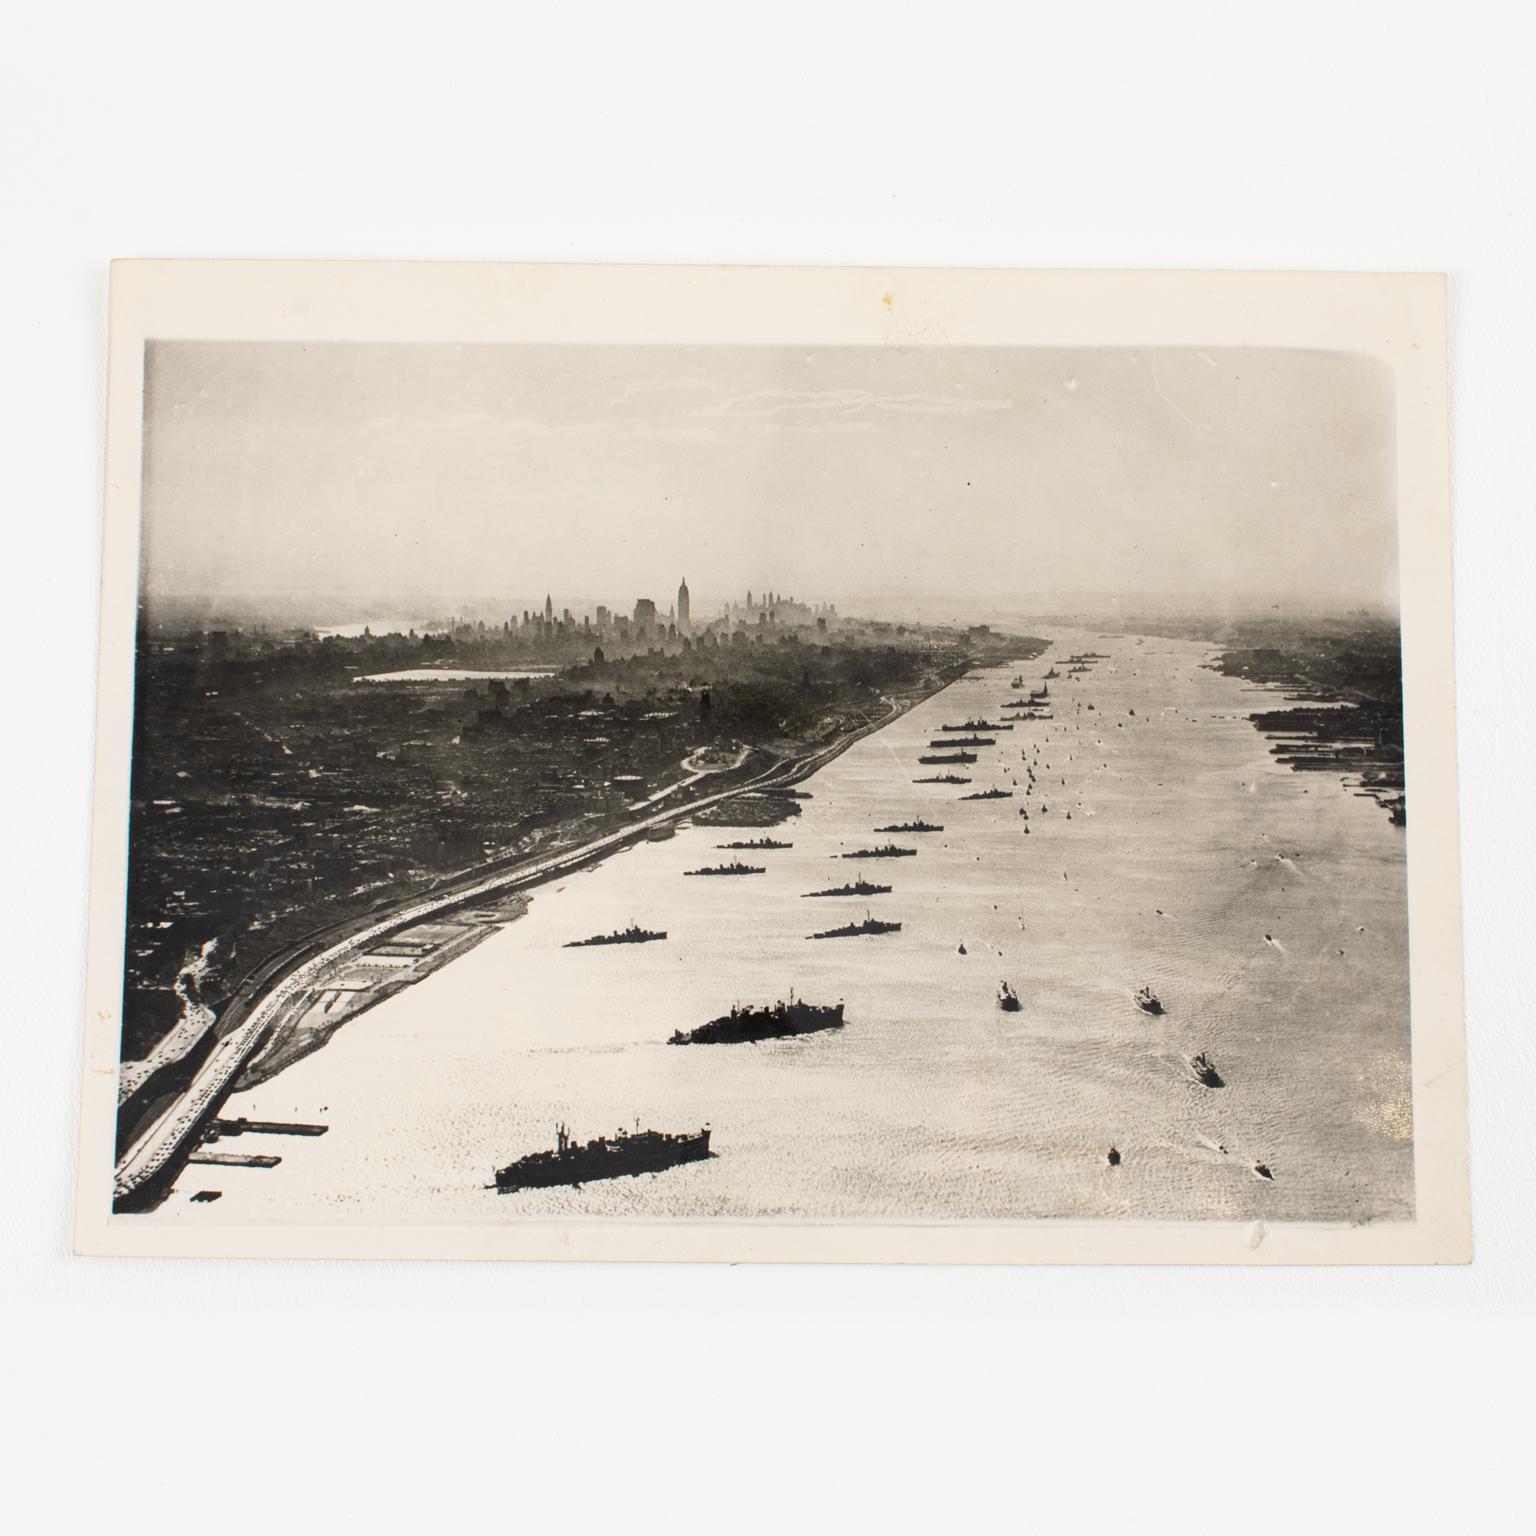 Hudson River, New York Navy Day 1945, photographie encadrée en vente 3